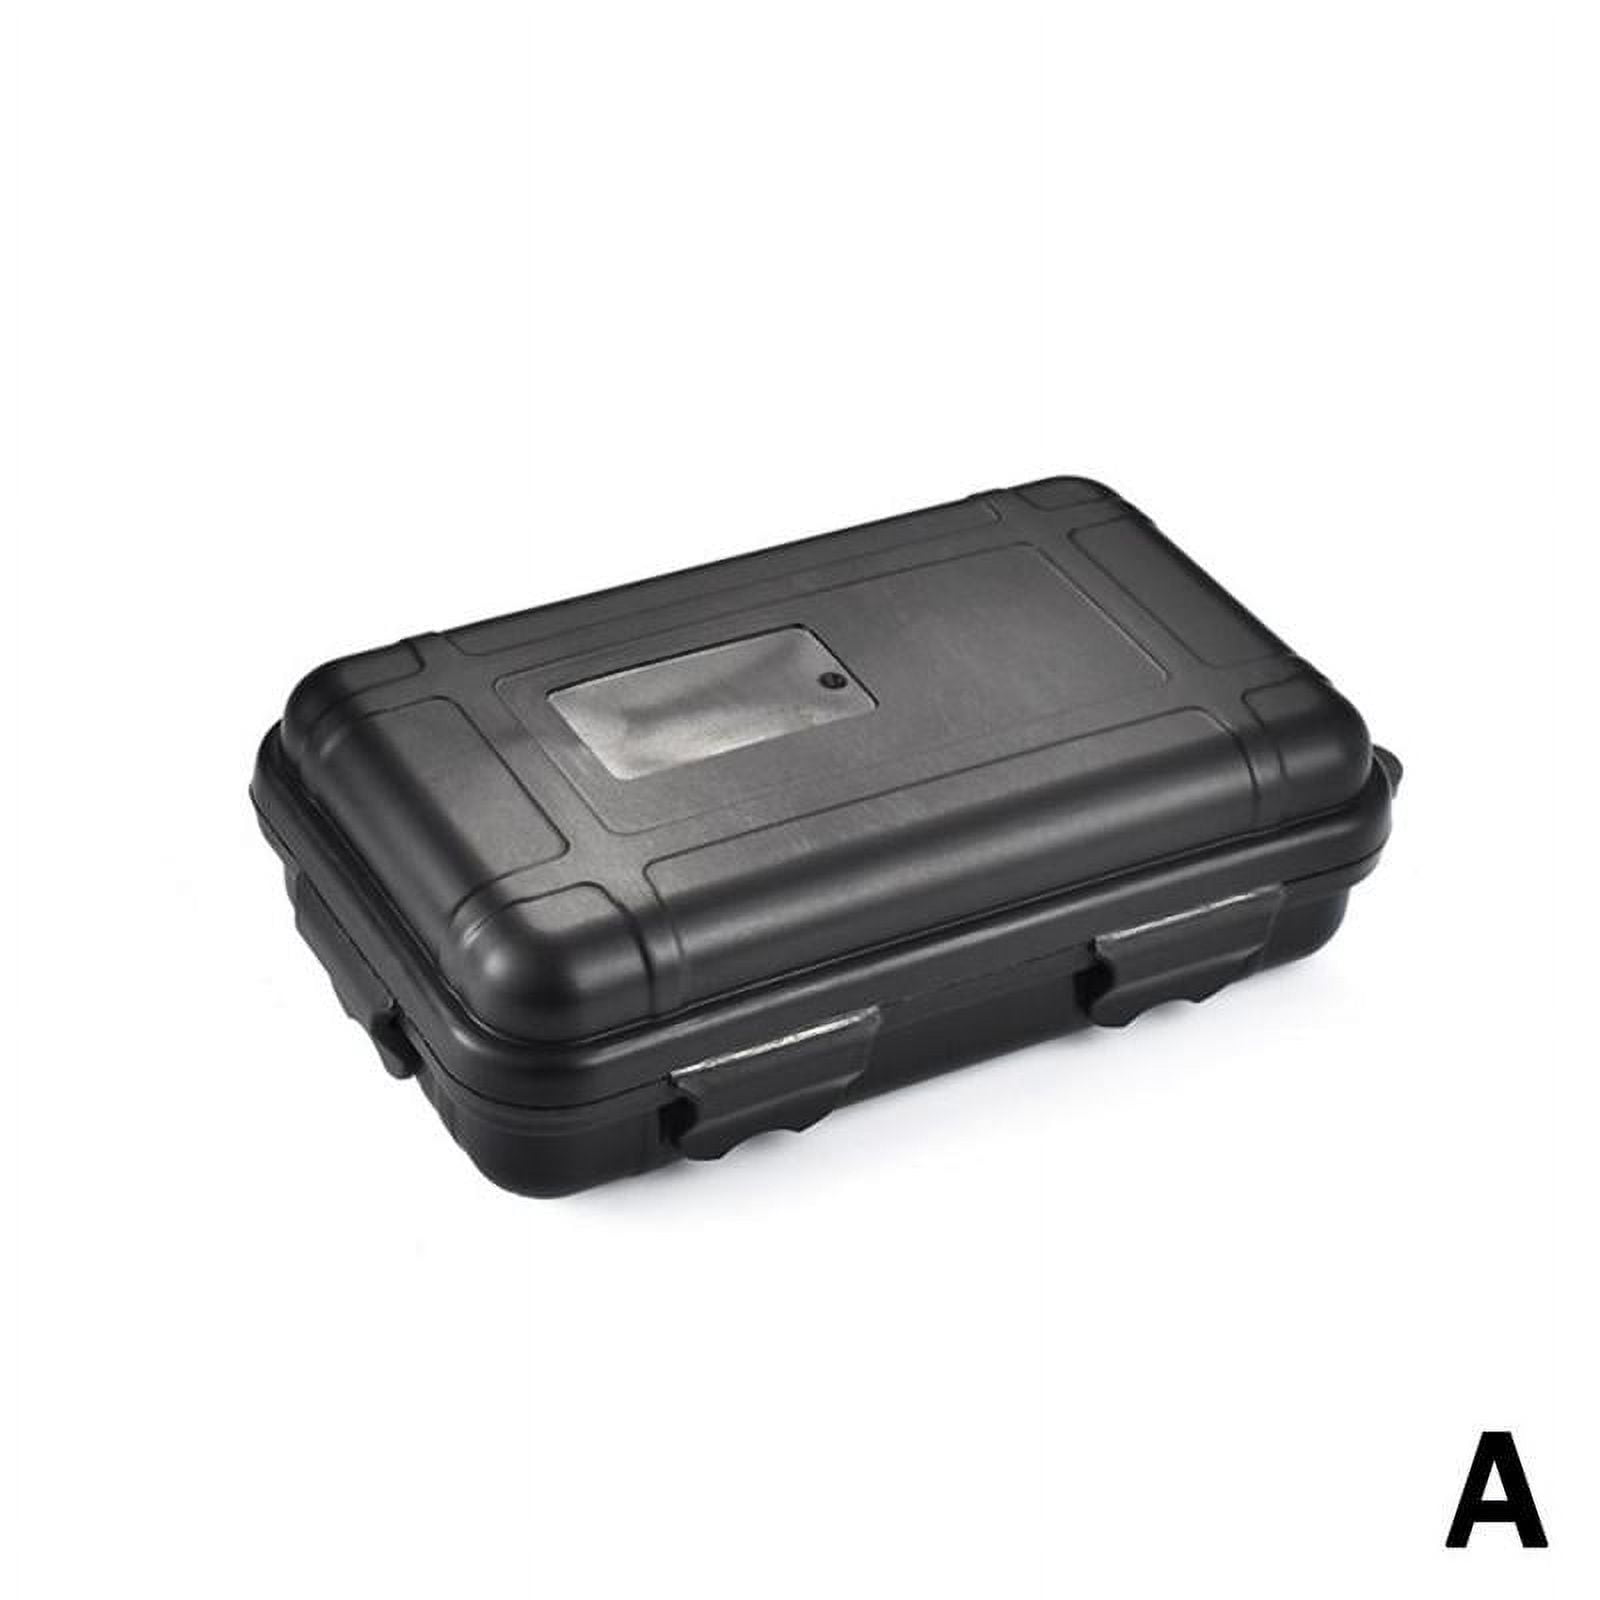 Outdoor Shockproof Waterproof Box Survival Airtight Case Holder